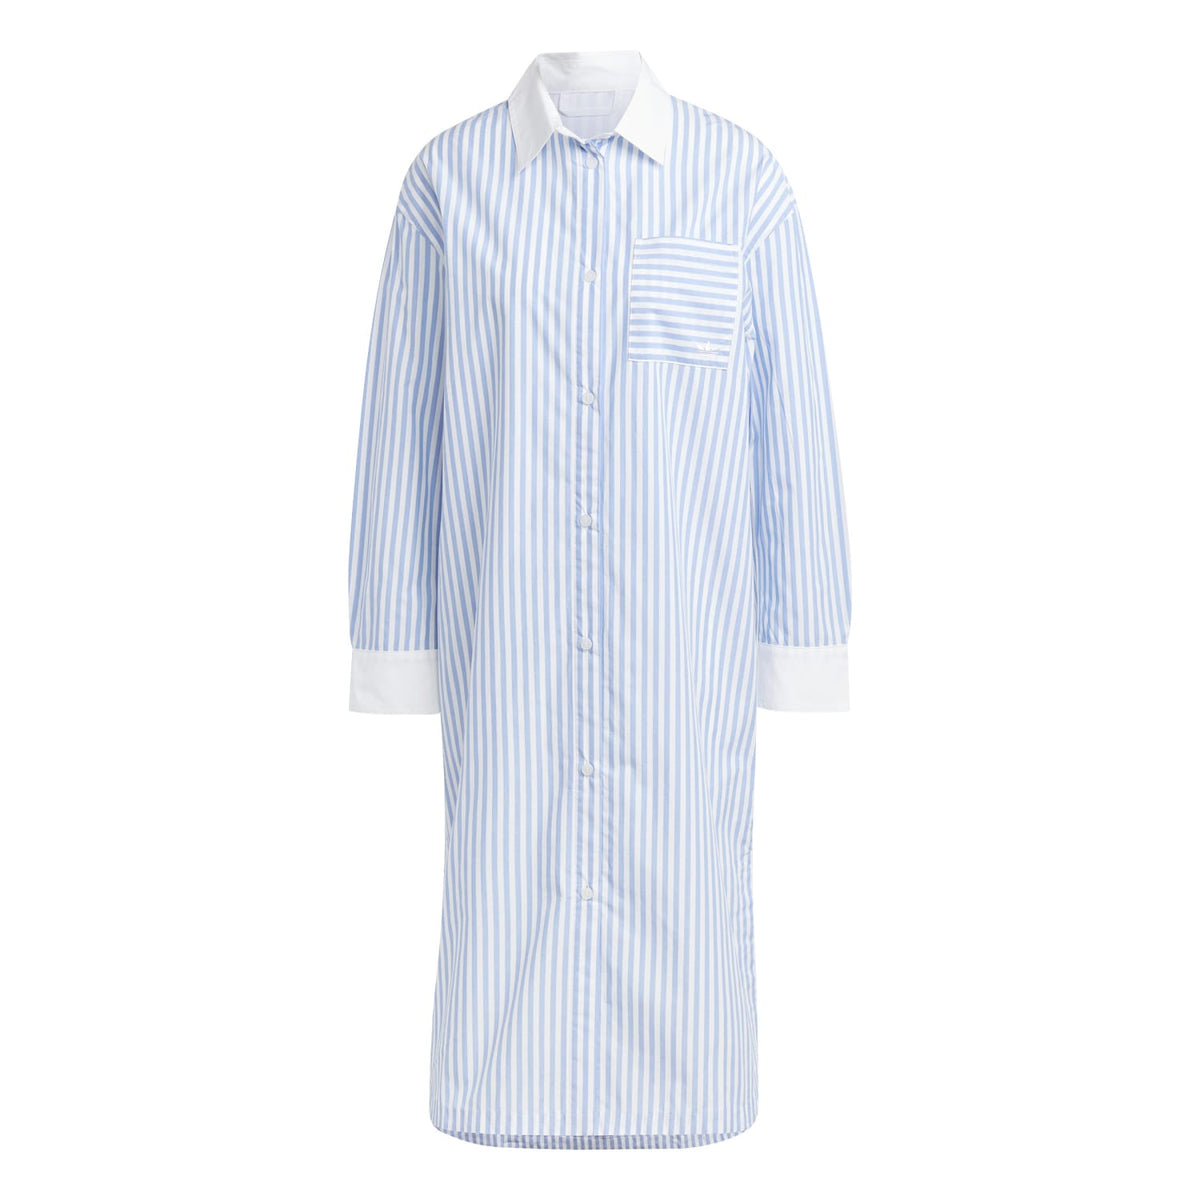 adidas women ess shirt Pecora dress white blue ic5296 705 1200x